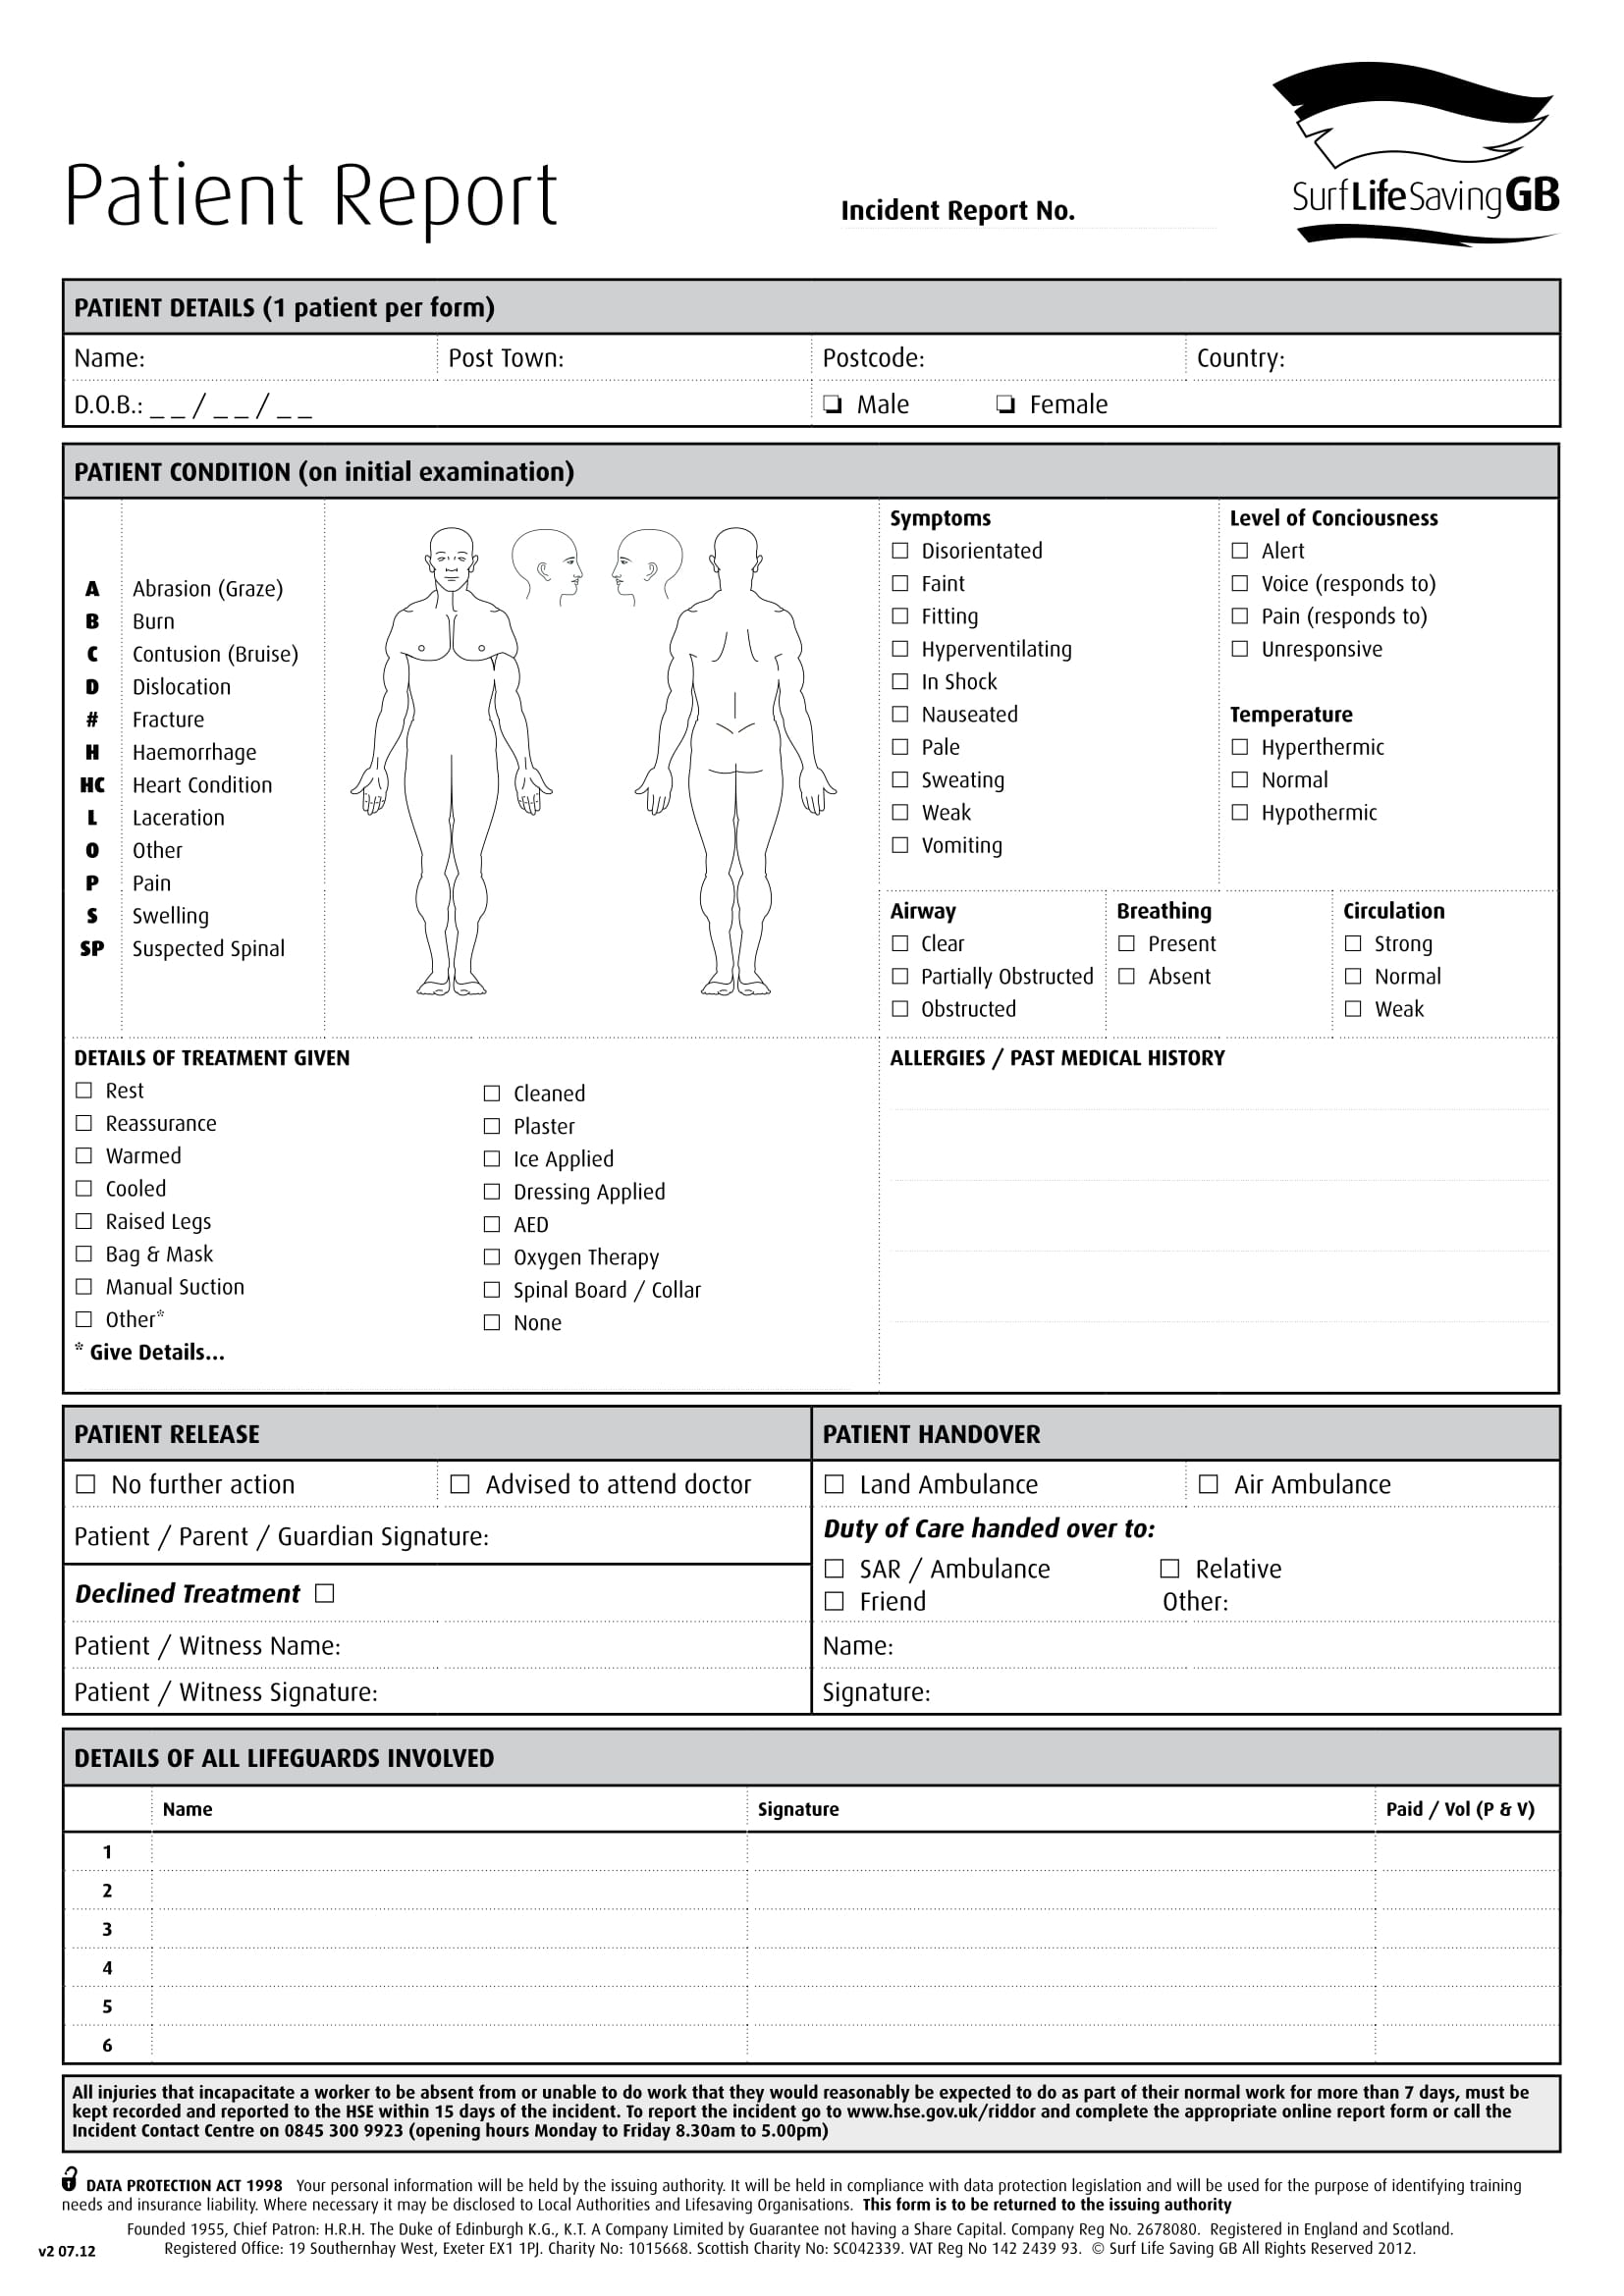 Patient Report Form Template Download Riset